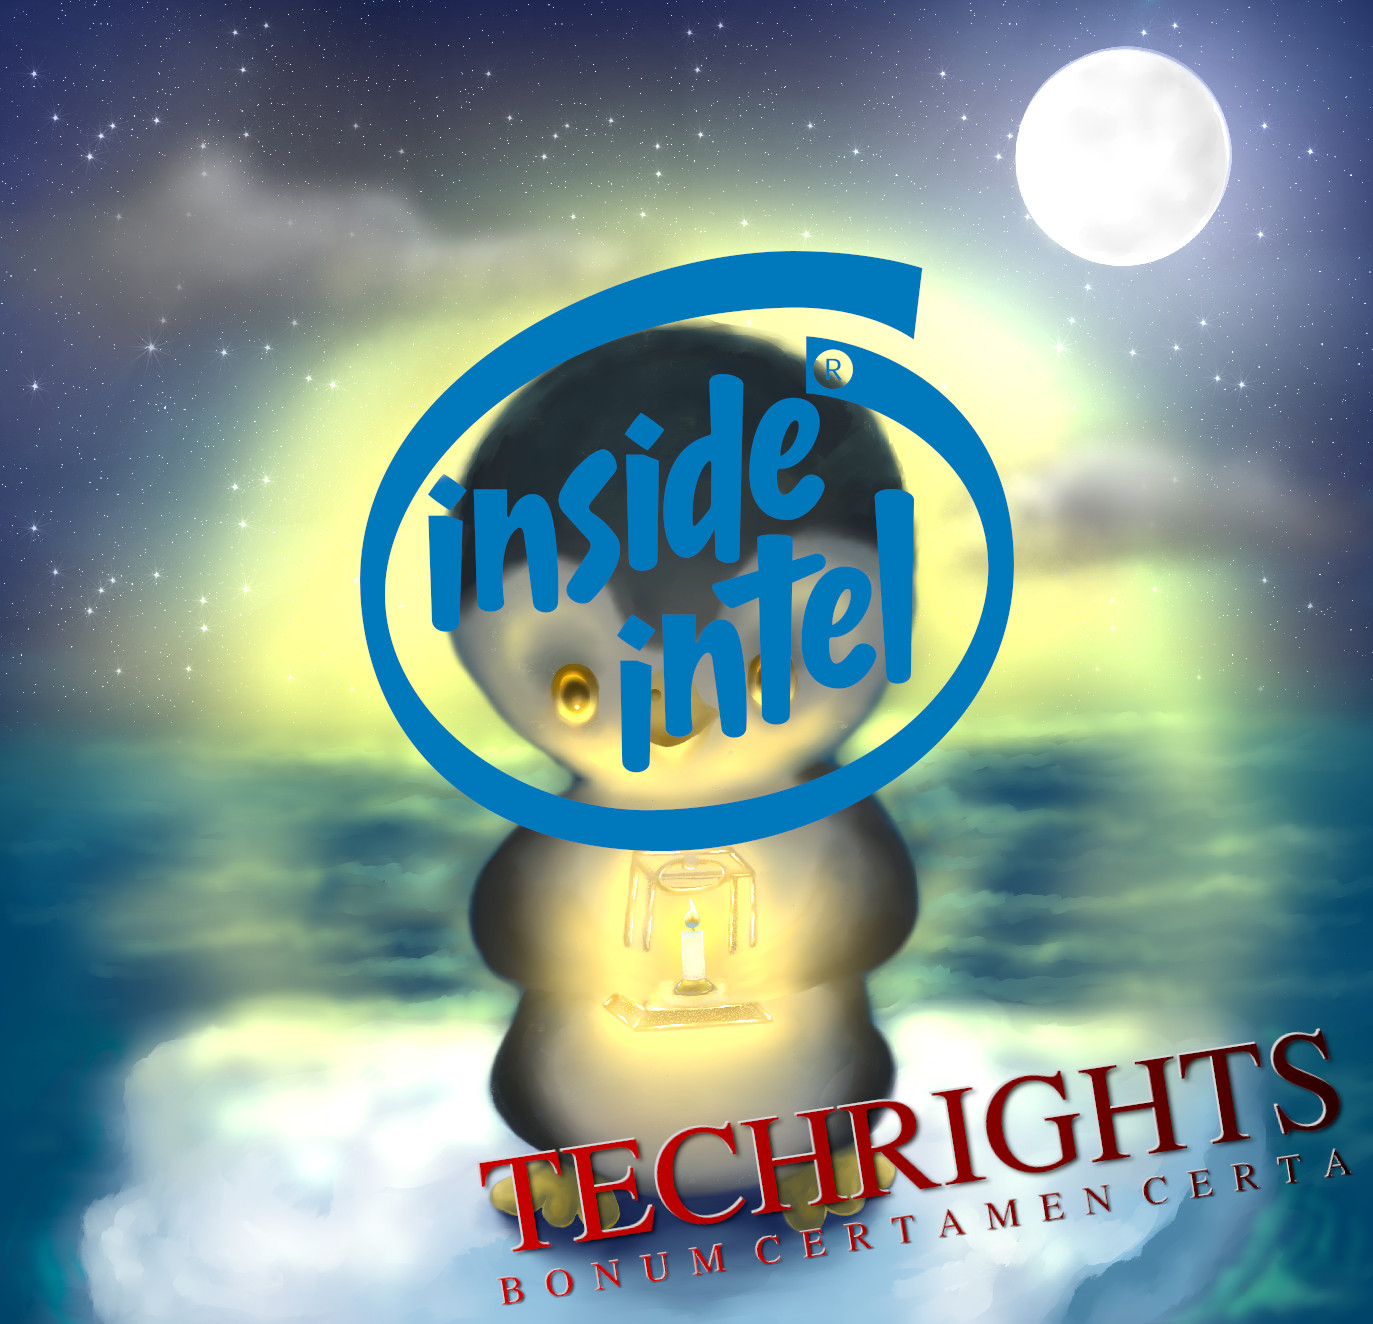 The Inside Intel series